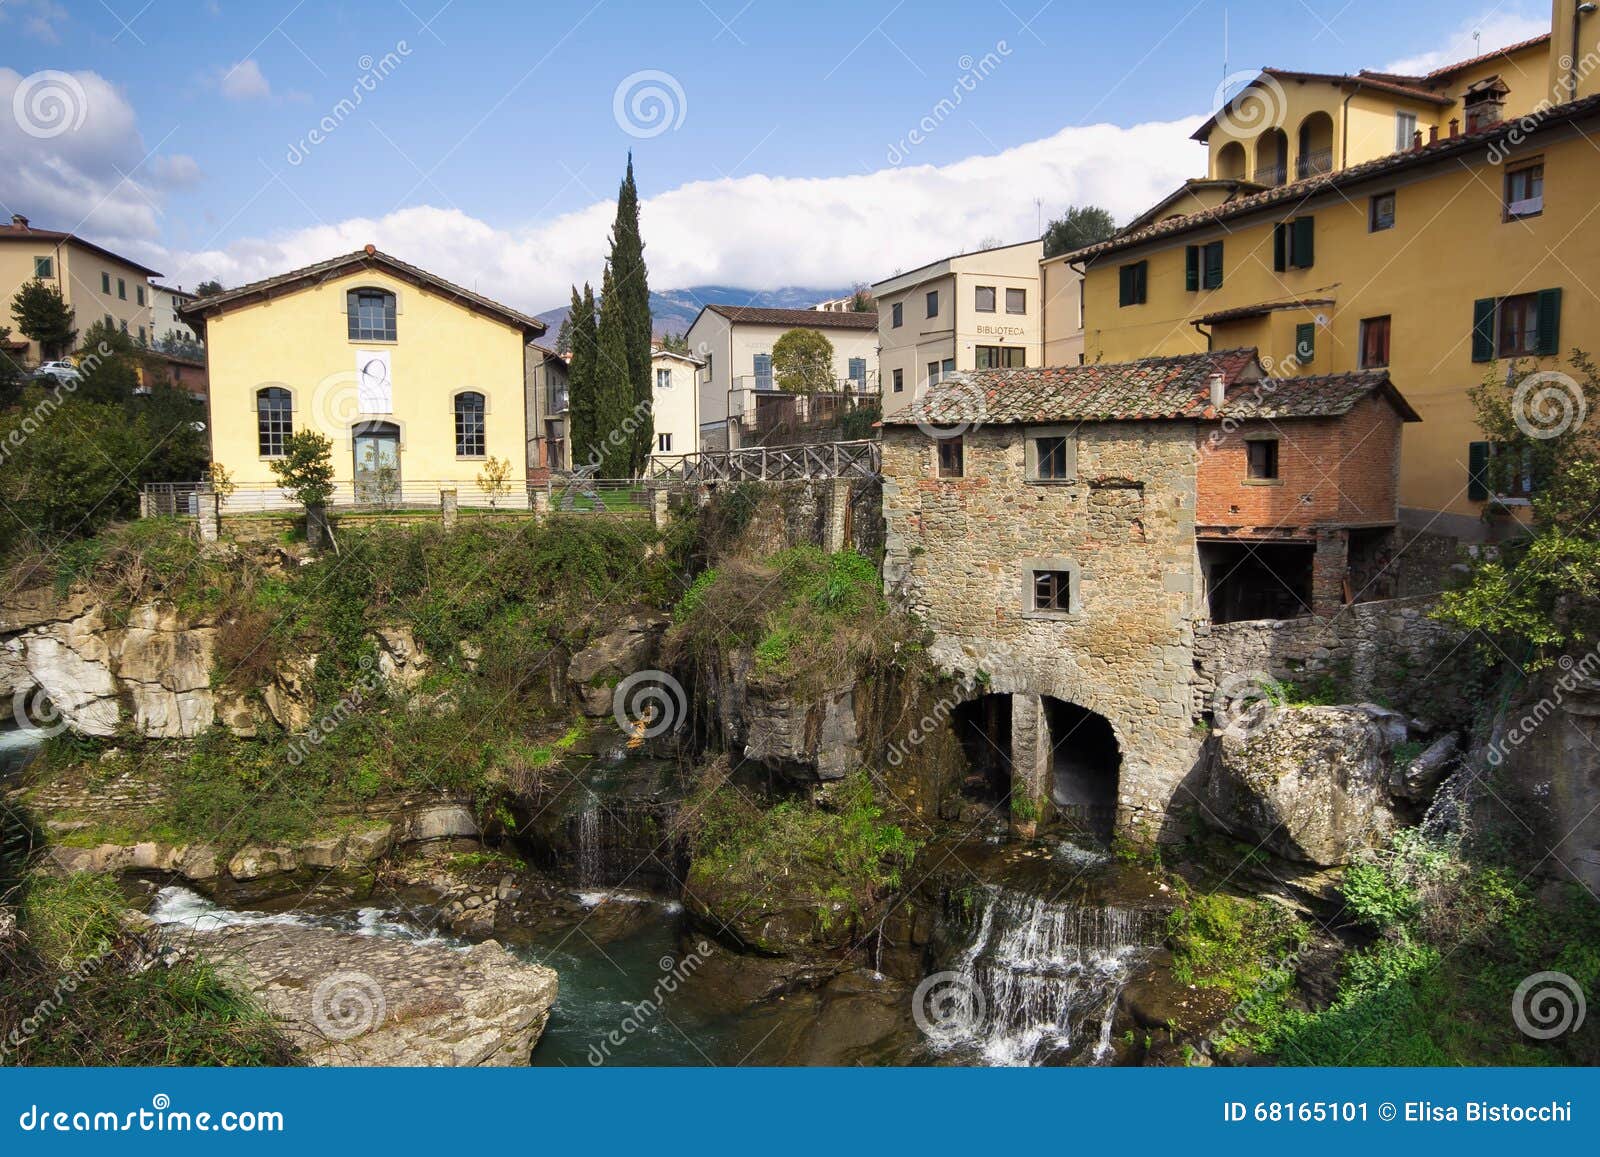 medieval town of loro ciuffenna